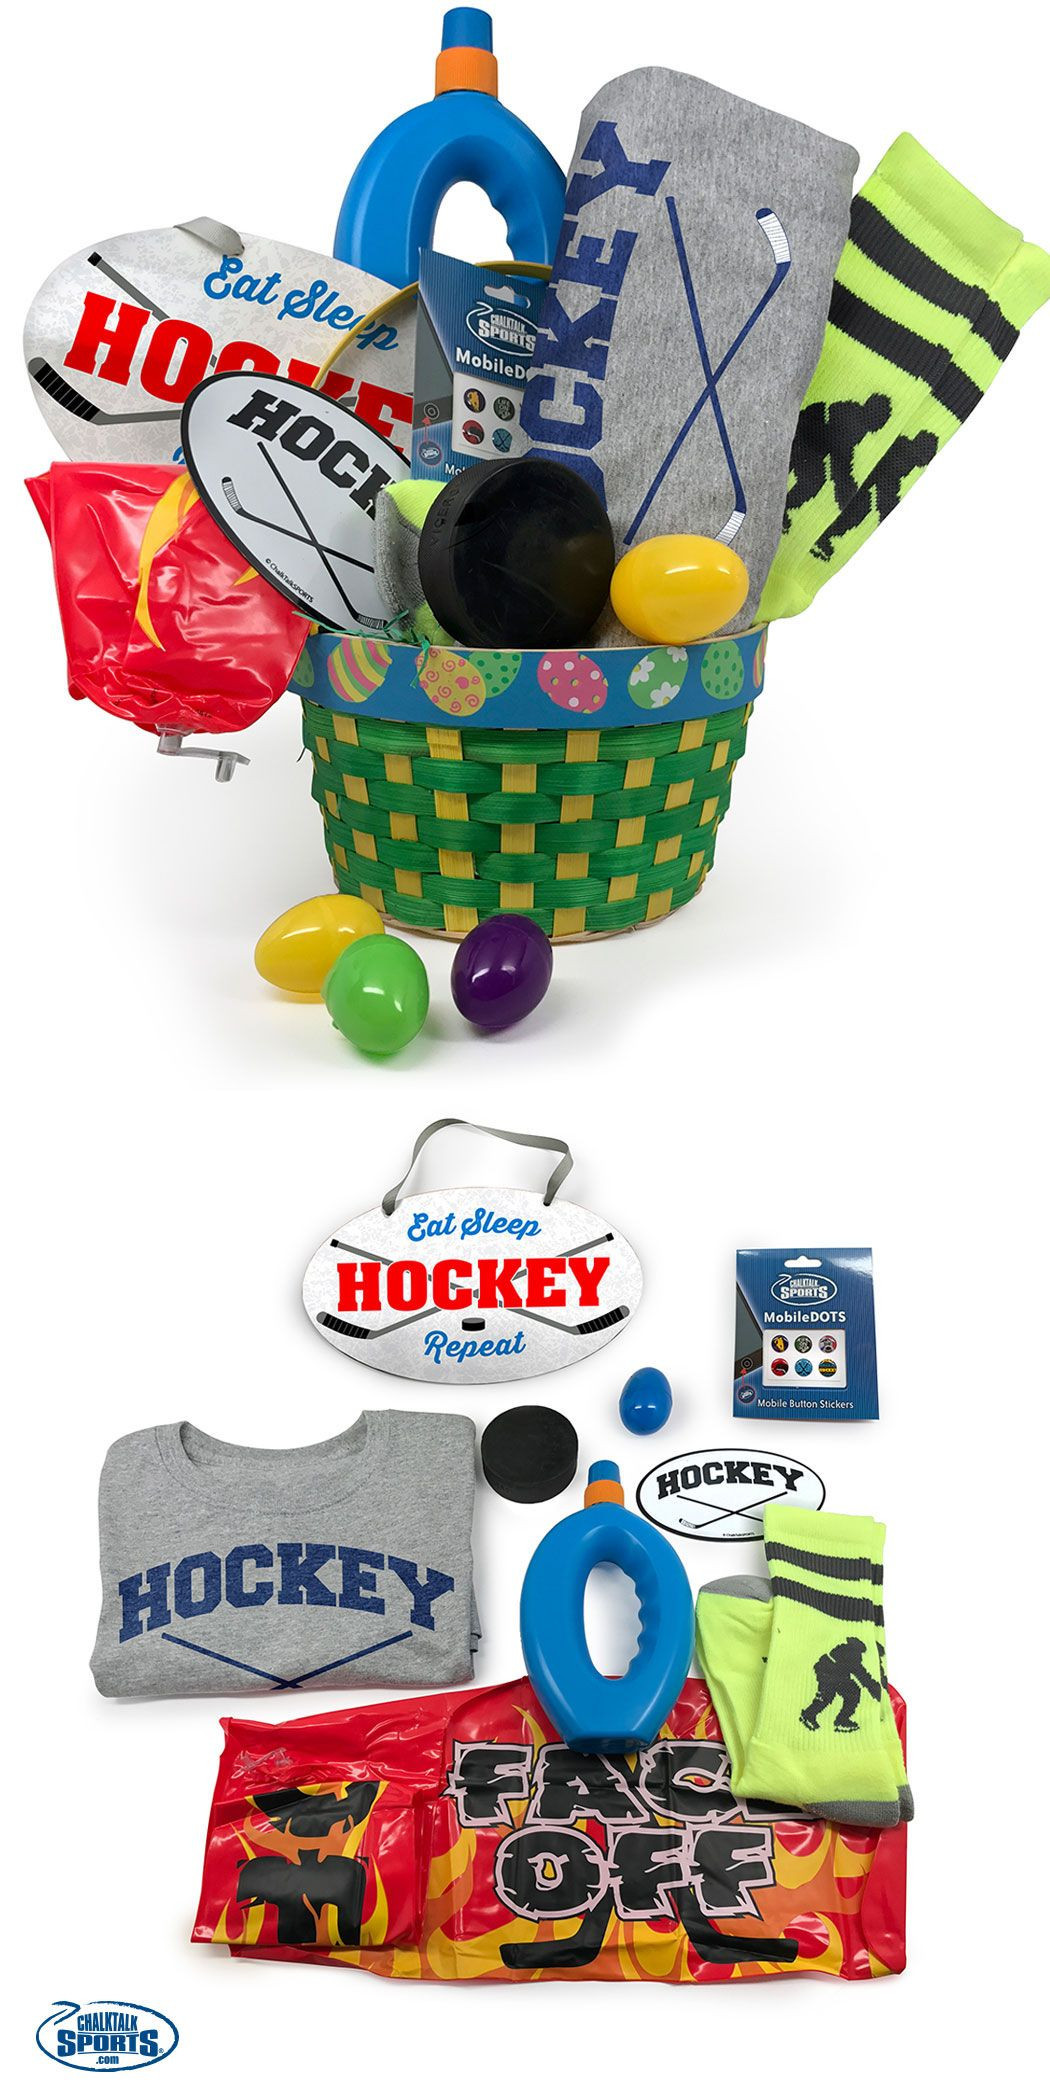 Hockey Gift Ideas For Boyfriend
 The Best Ideas for Hockey Gift Ideas for Boyfriend Home